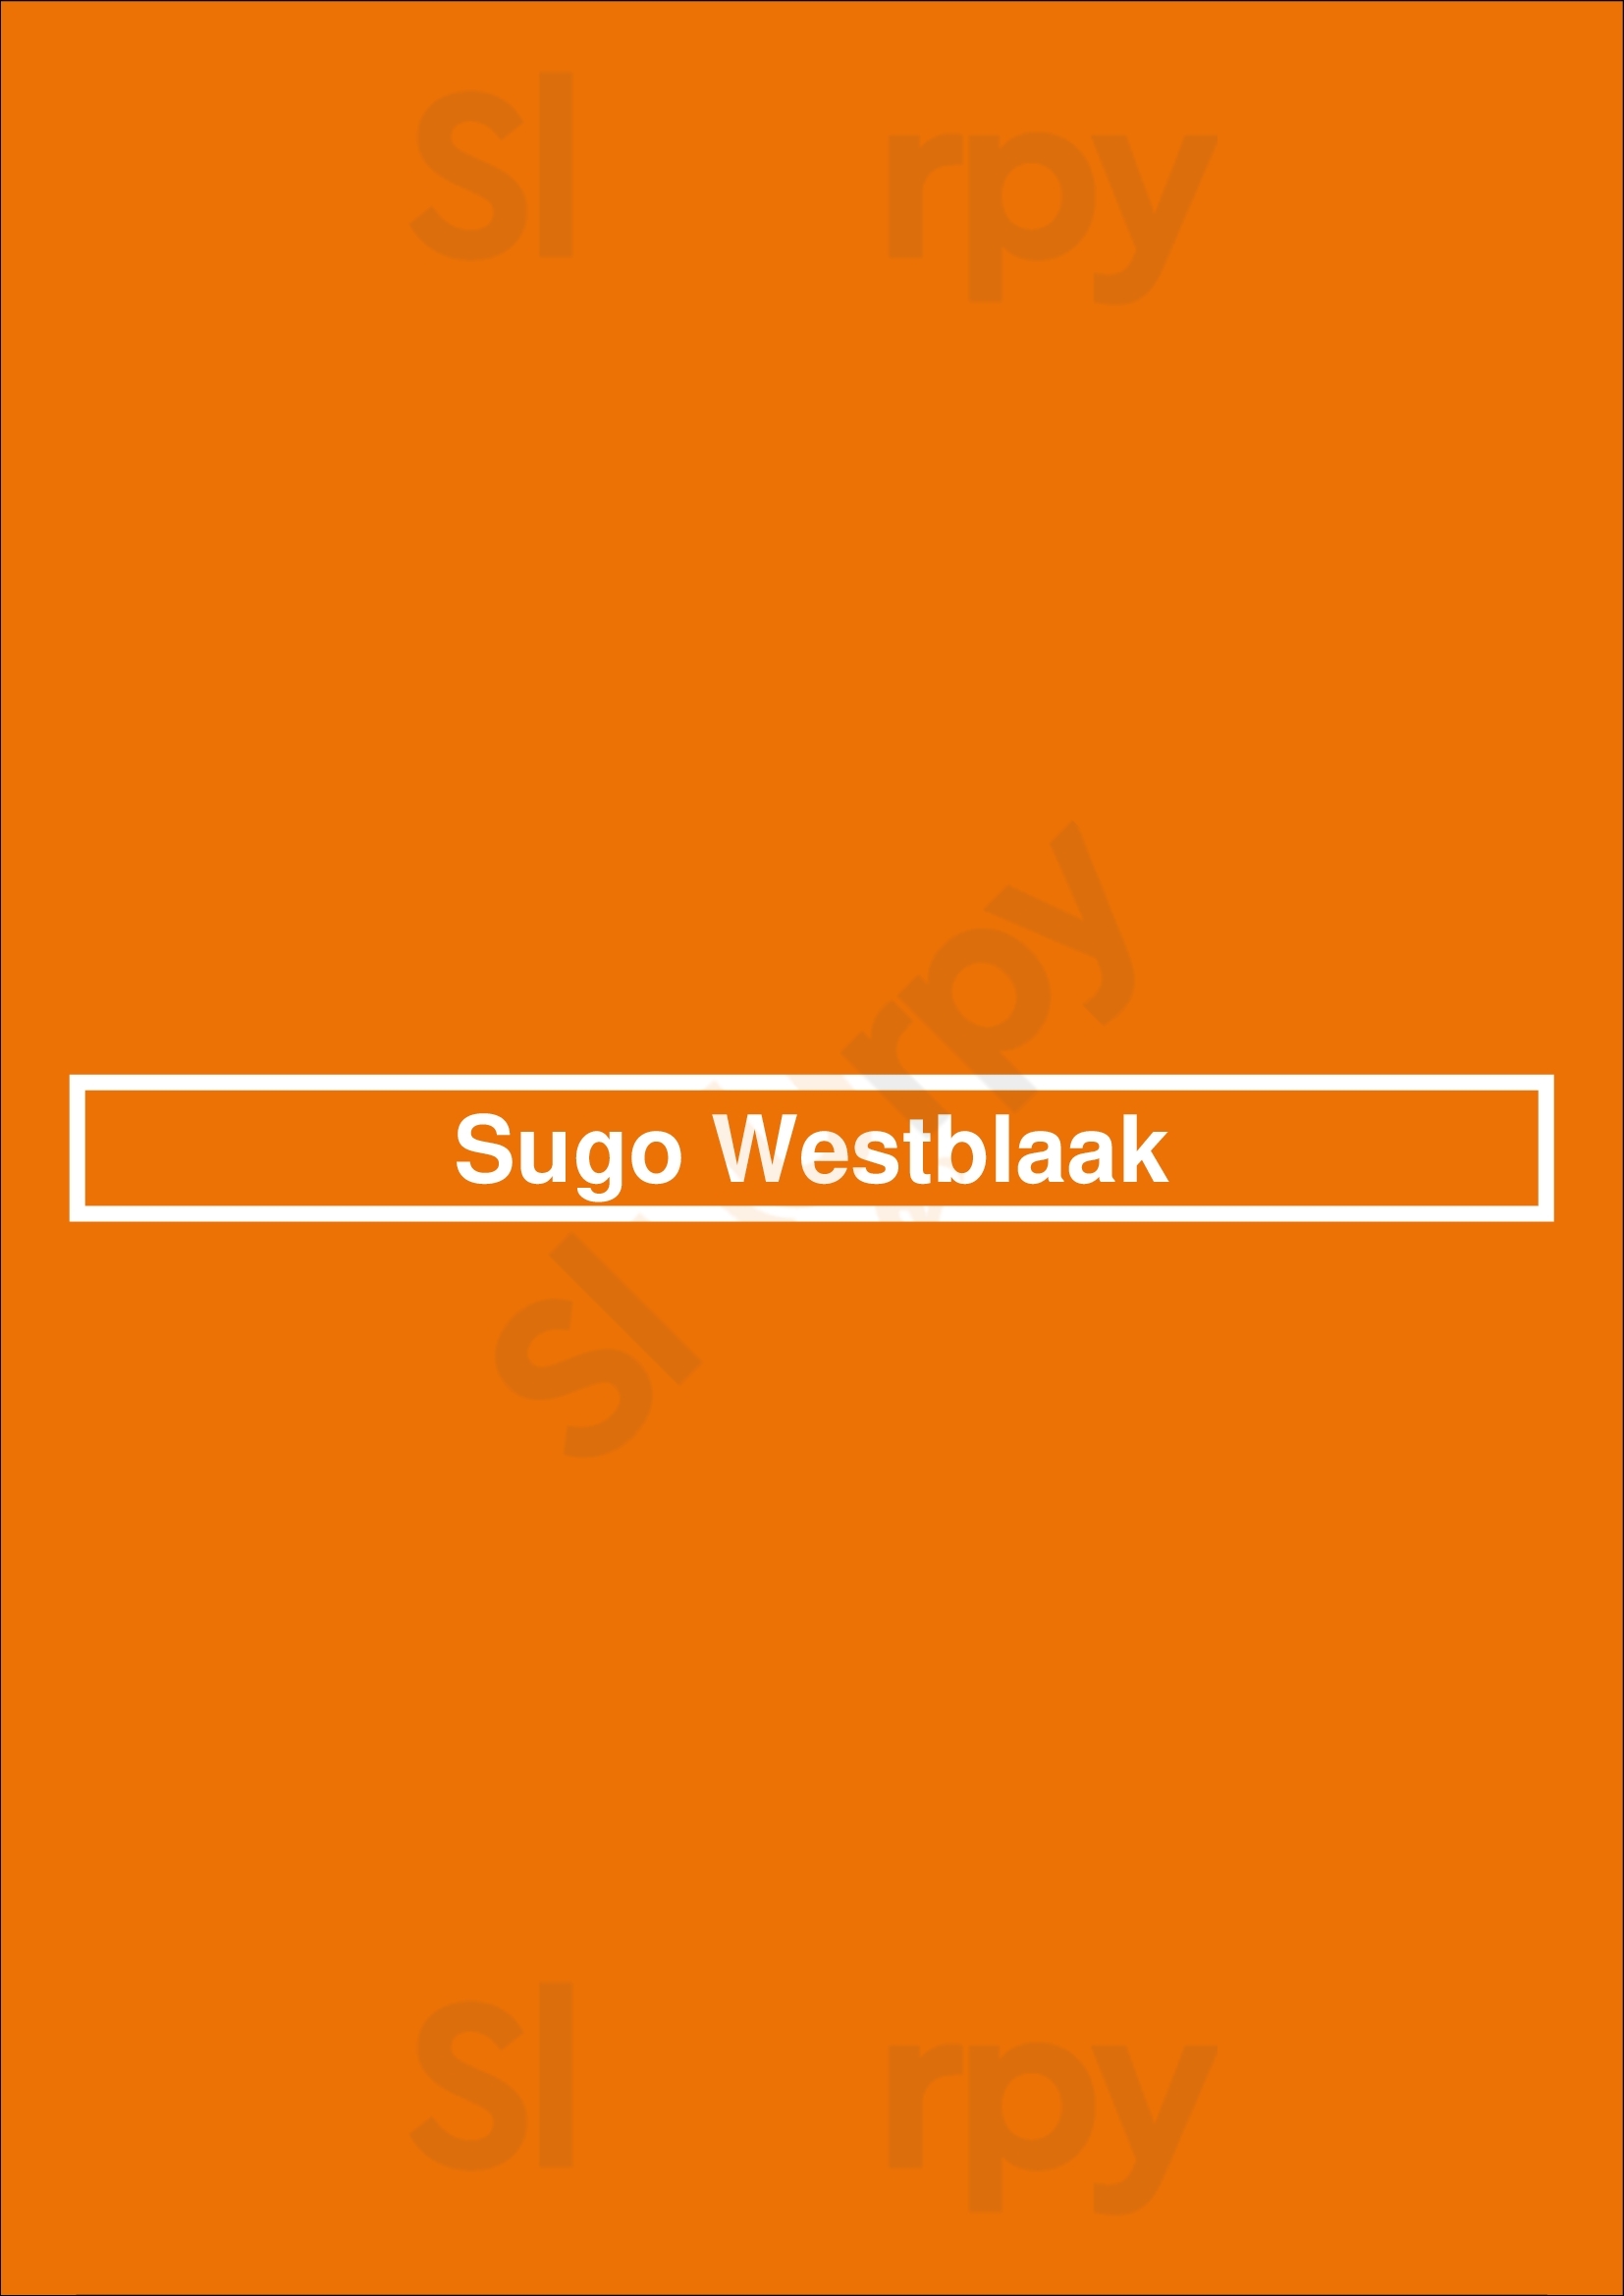 Sugo Westblaak Rotterdam Menu - 1